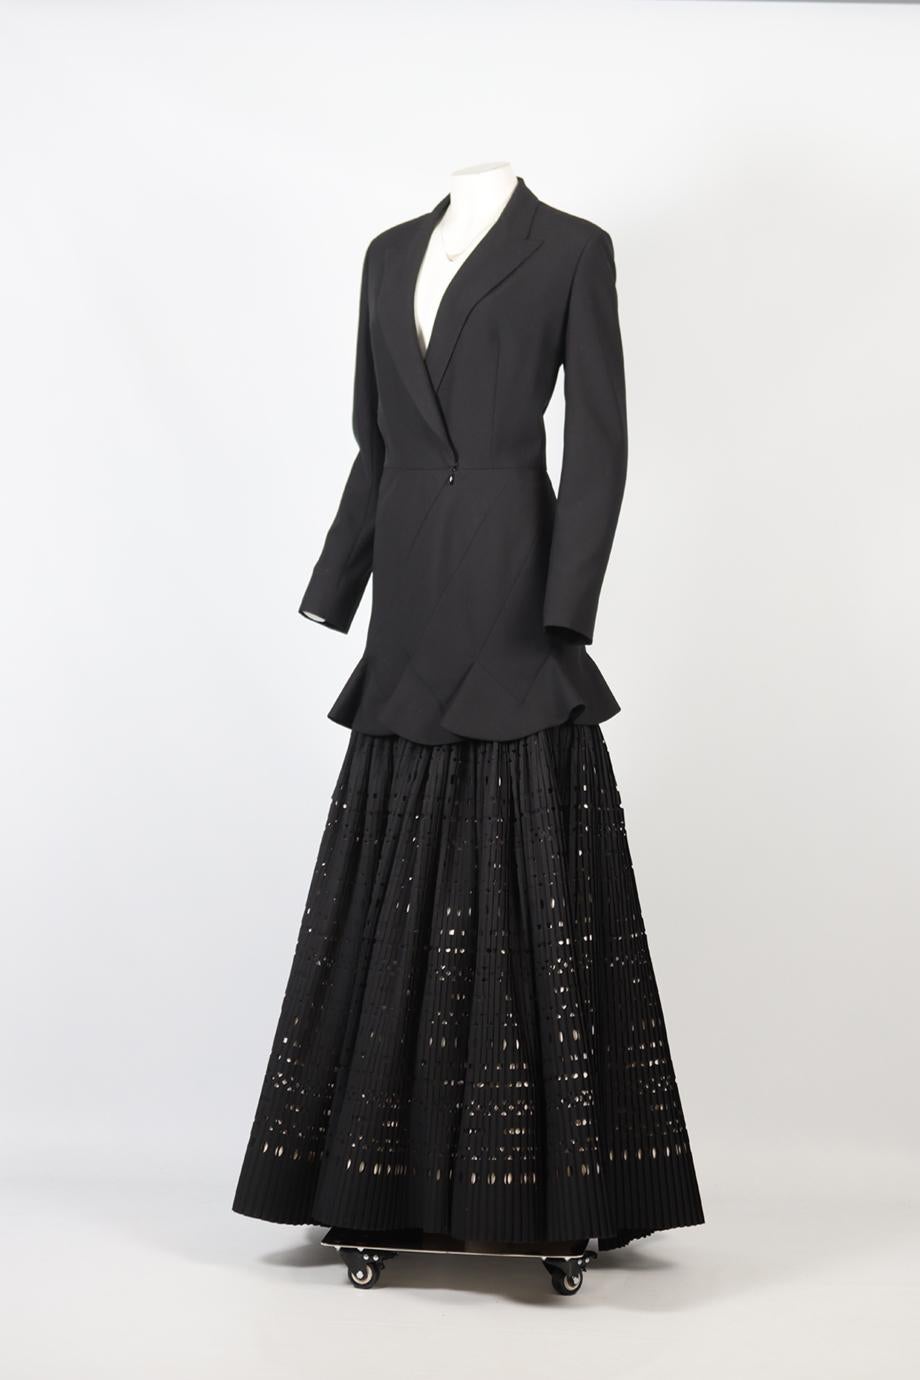 <ul>
<li>Azzedine Alaïa Haute Couture Wool Blend Gown.</li>
<li>Black.</li>
<li>Long Sleeve.</li>
<li>V-Neck.</li>
<li>Zip fastening - Back.</li>
<li>No composition label.</li>
<li><strong>Large (UK 12, US 8, FR 40, IT